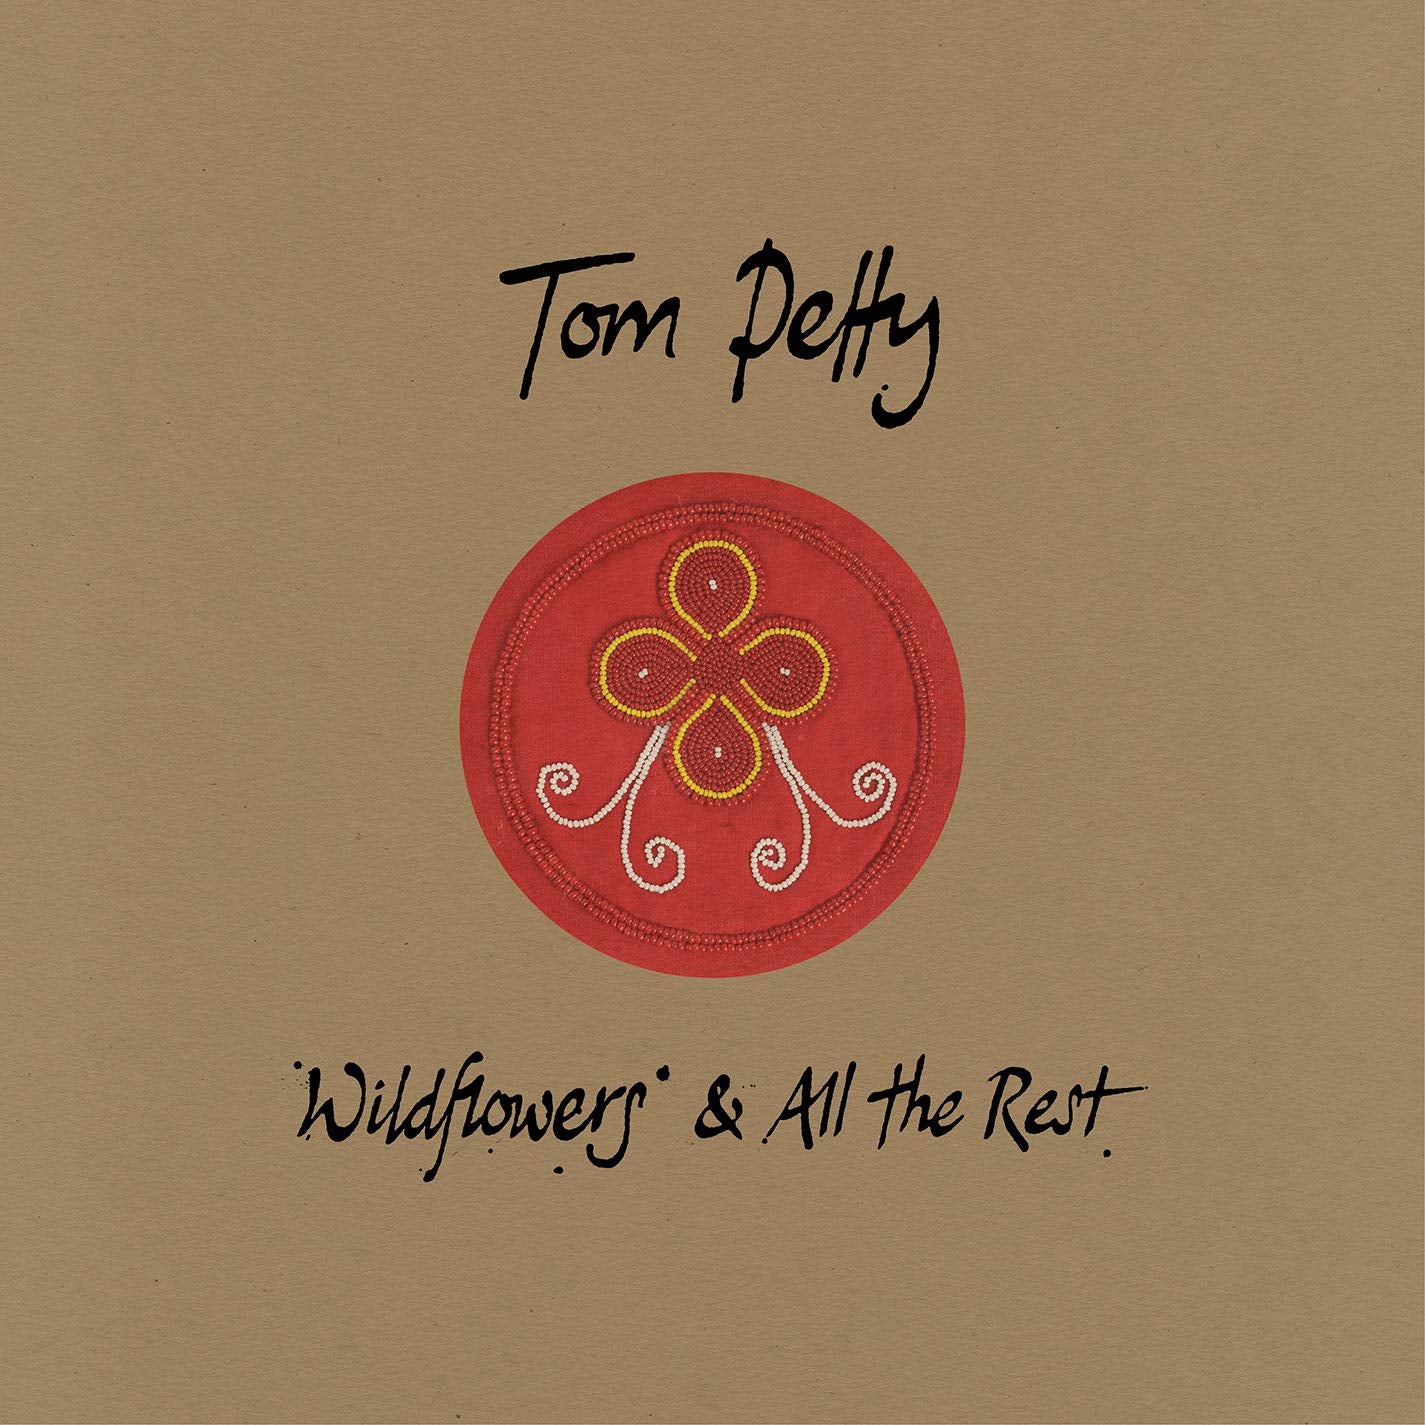 Tom Petty "Wildflowers & All The Rest" [3xLP 180g Black Vinyl]